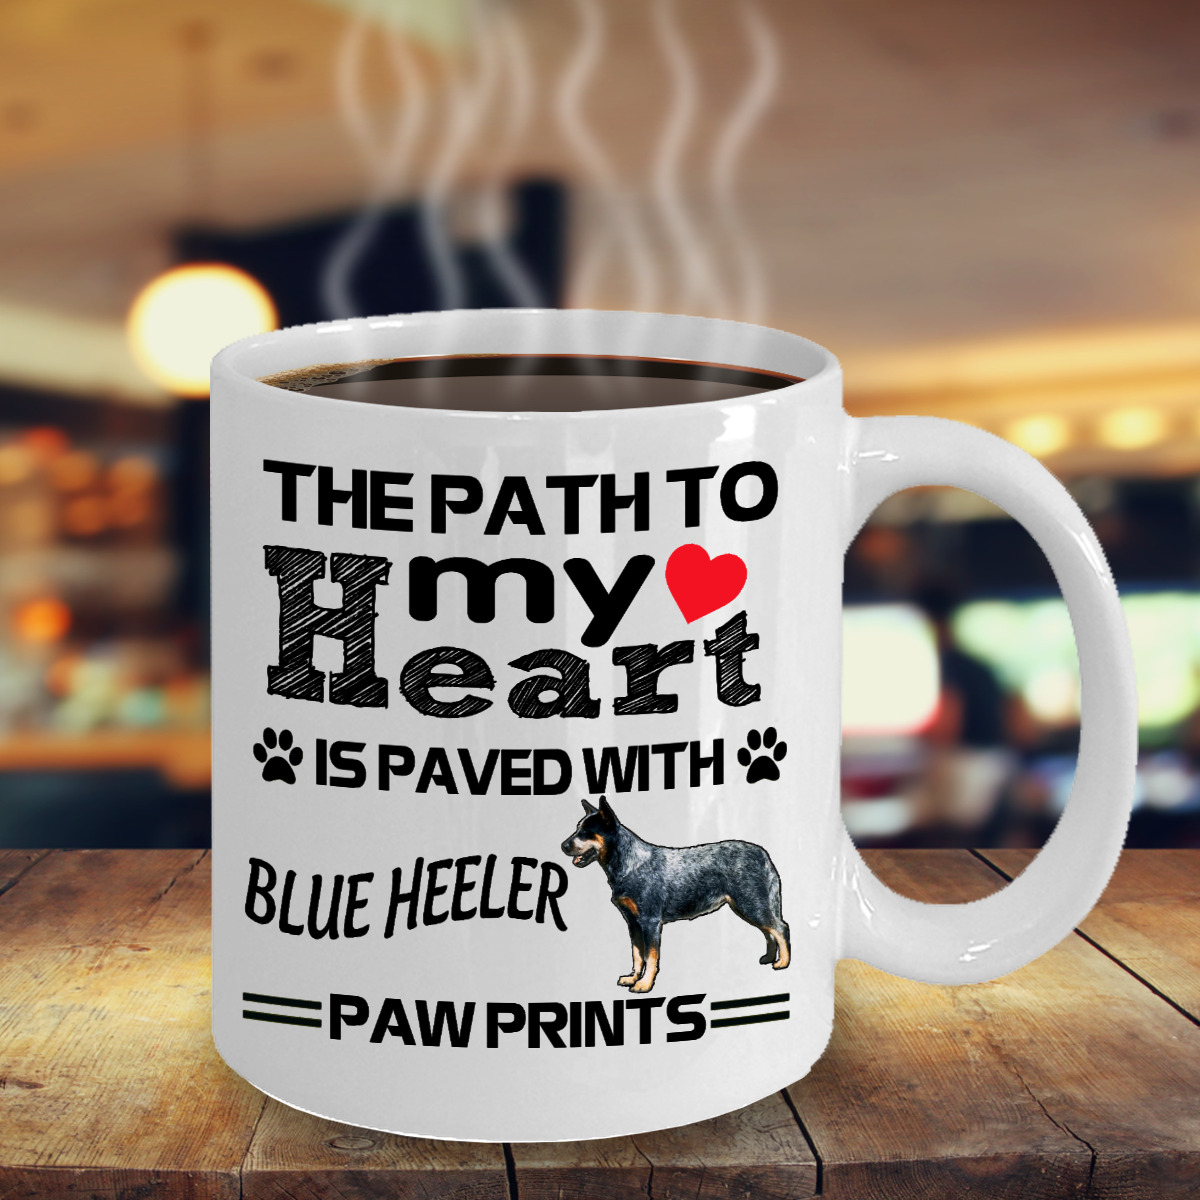 Blue Heeler dog,Australian Cattle Dog,ACD,To my Wife gift,QueenslandDog,Cup,Mugs